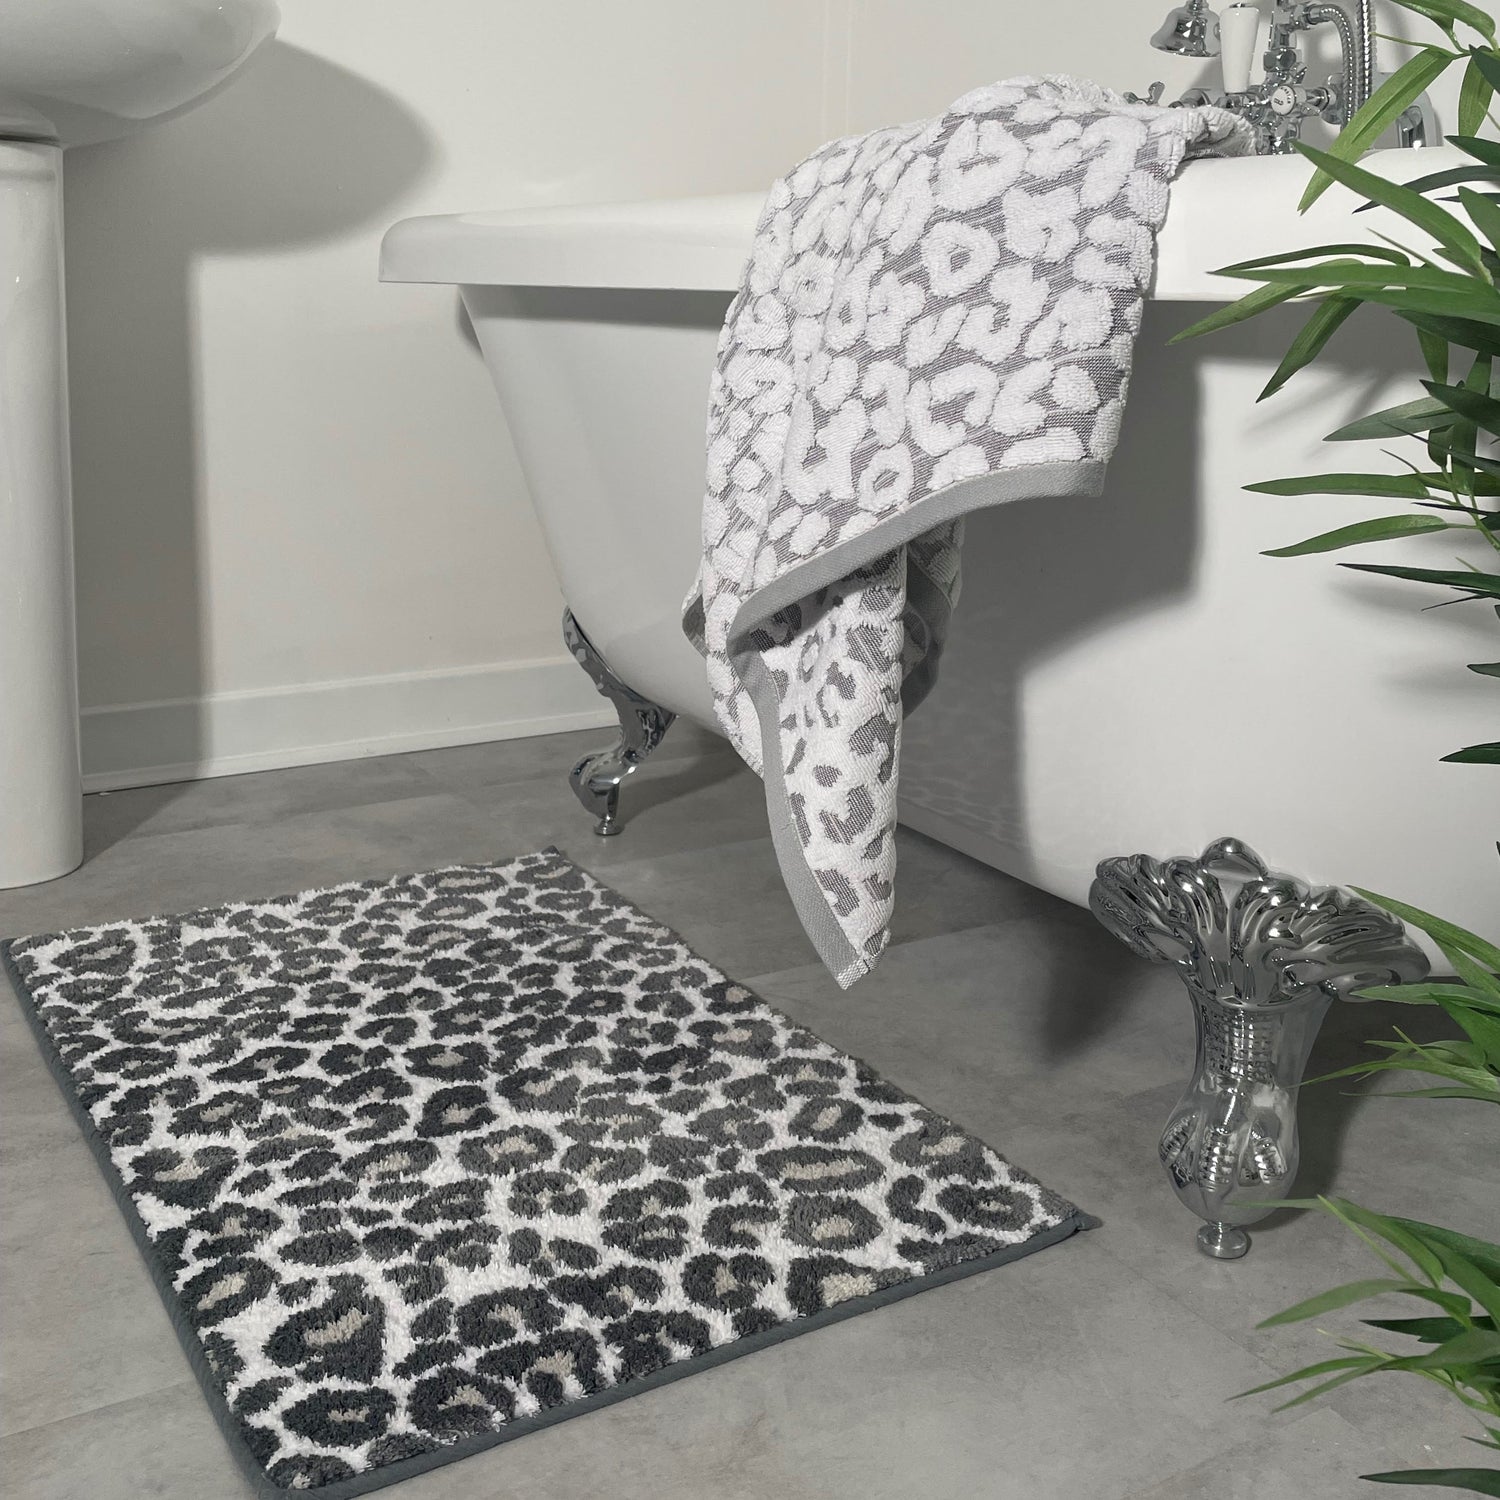 Monochrome leopard print bathroom towels and mat